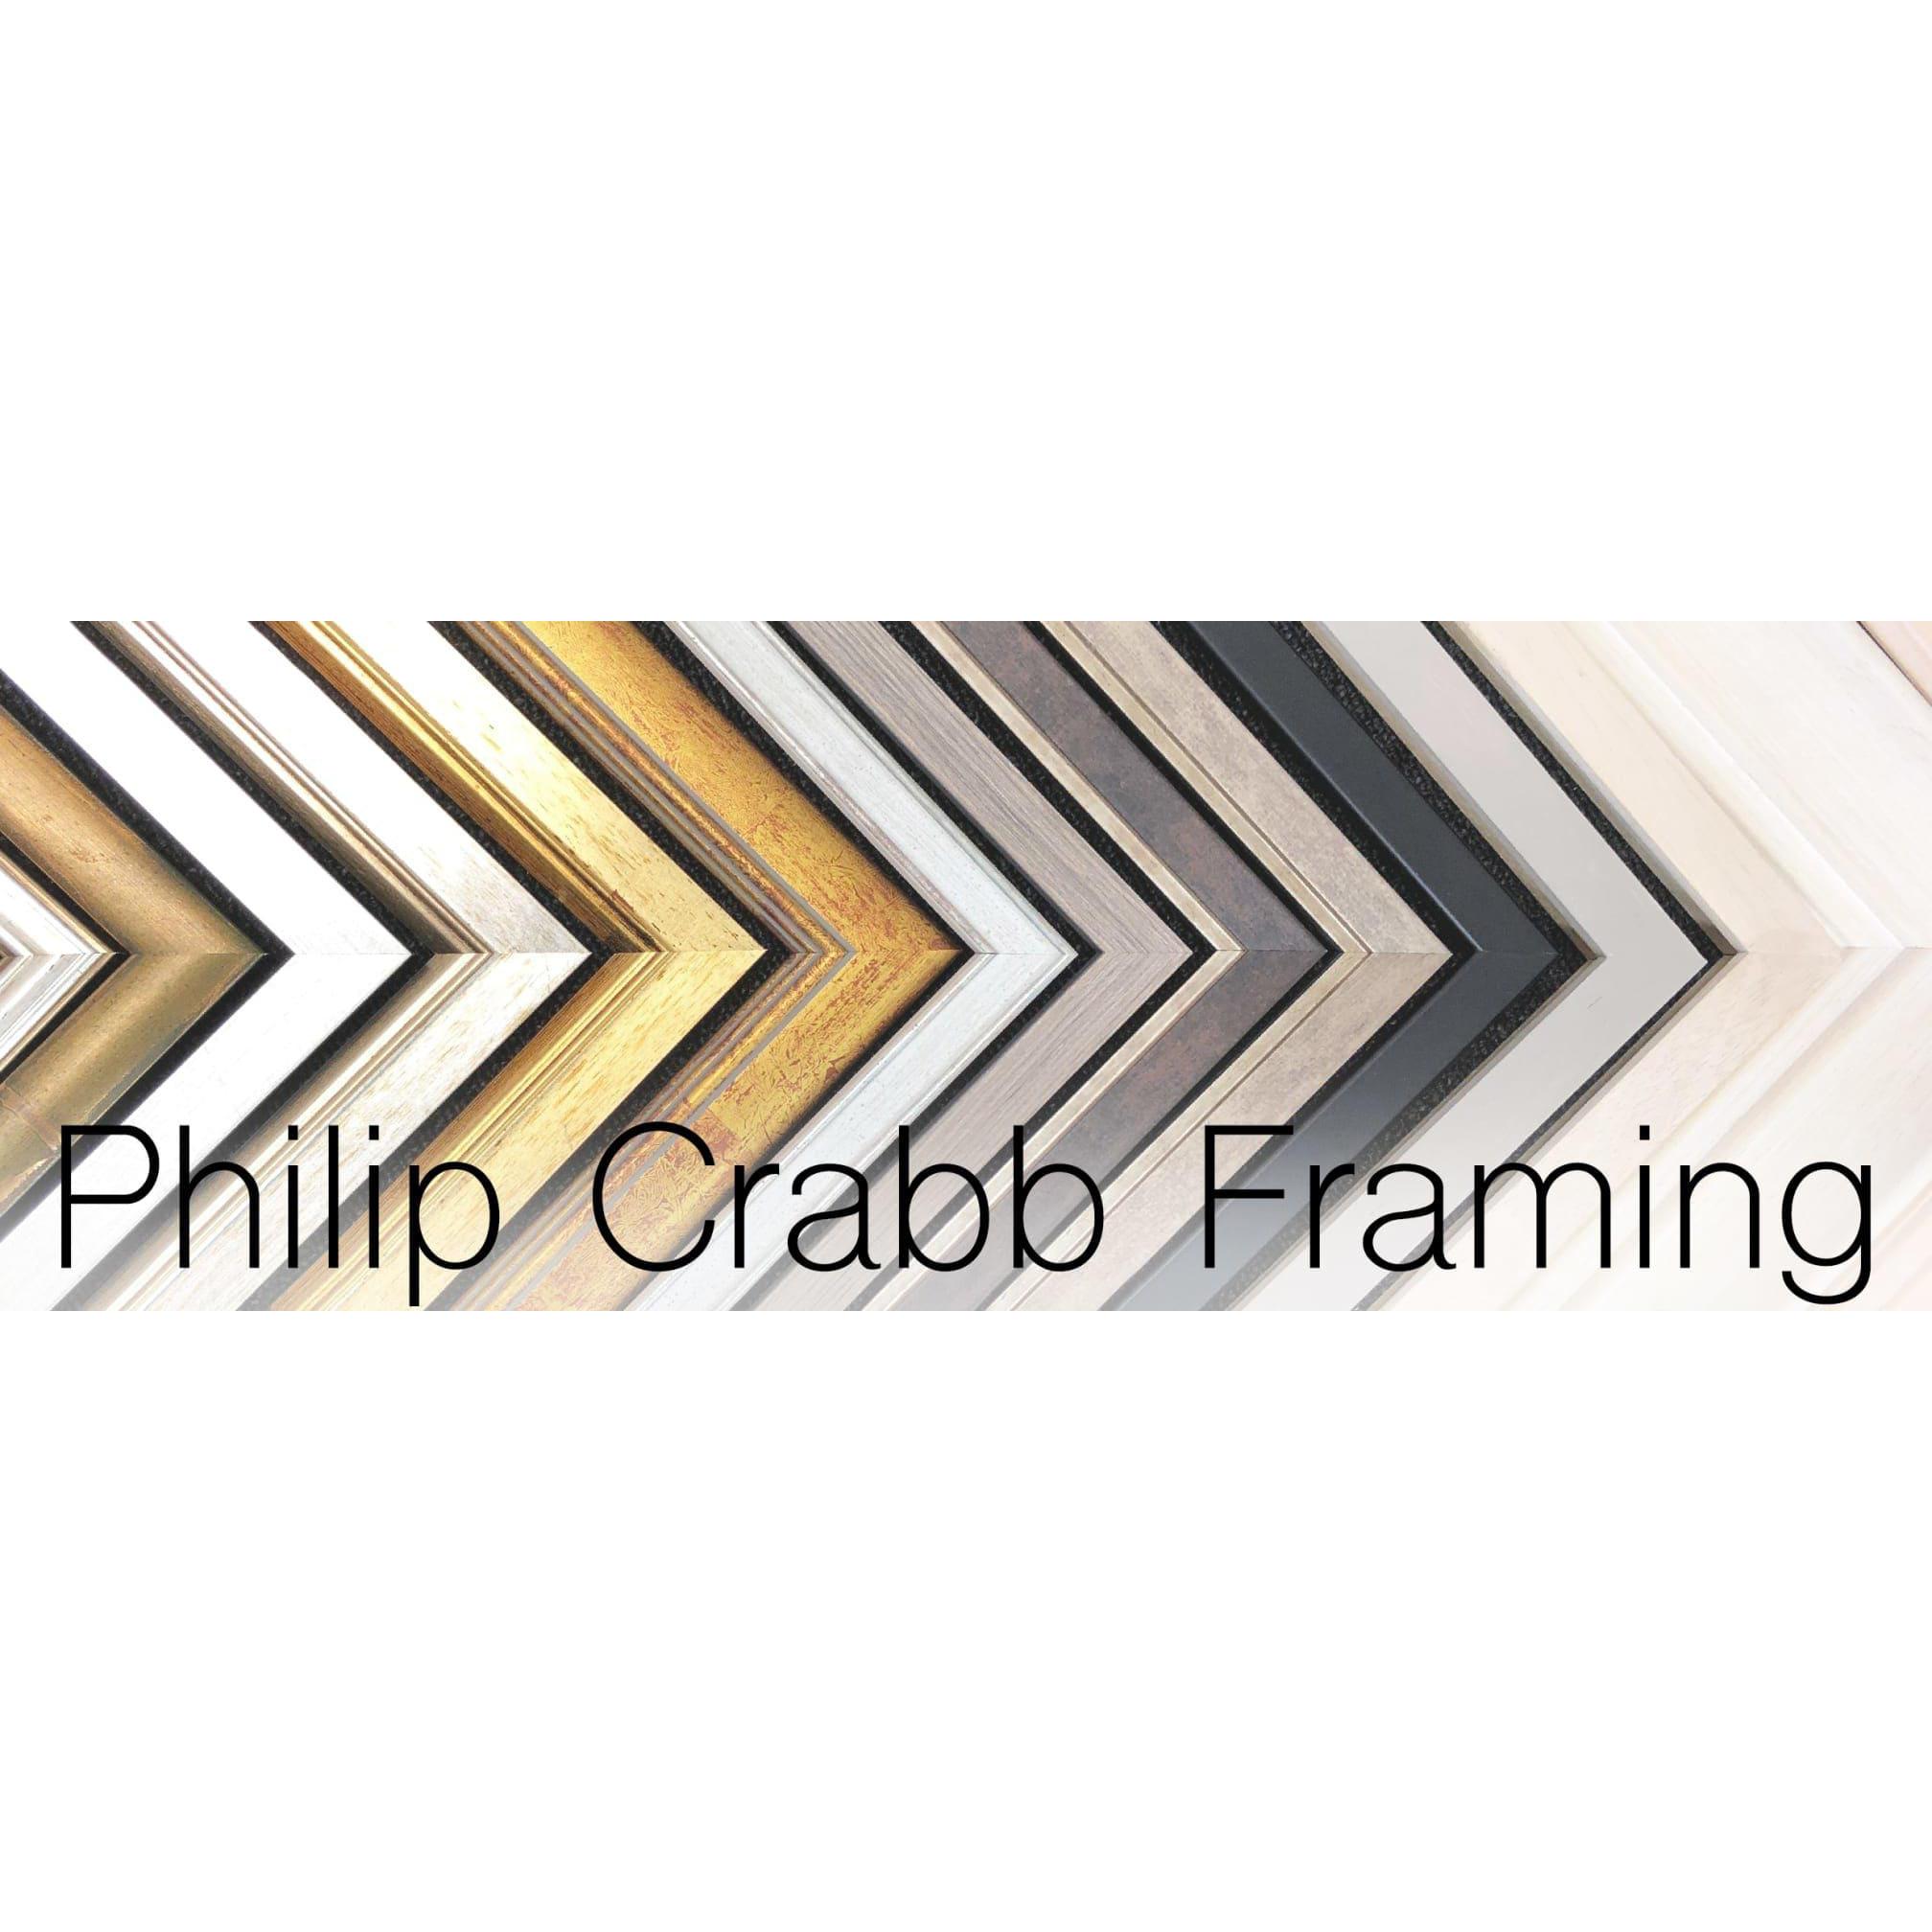 LOGO Philip Crabb Framing Dundee 07841 561906